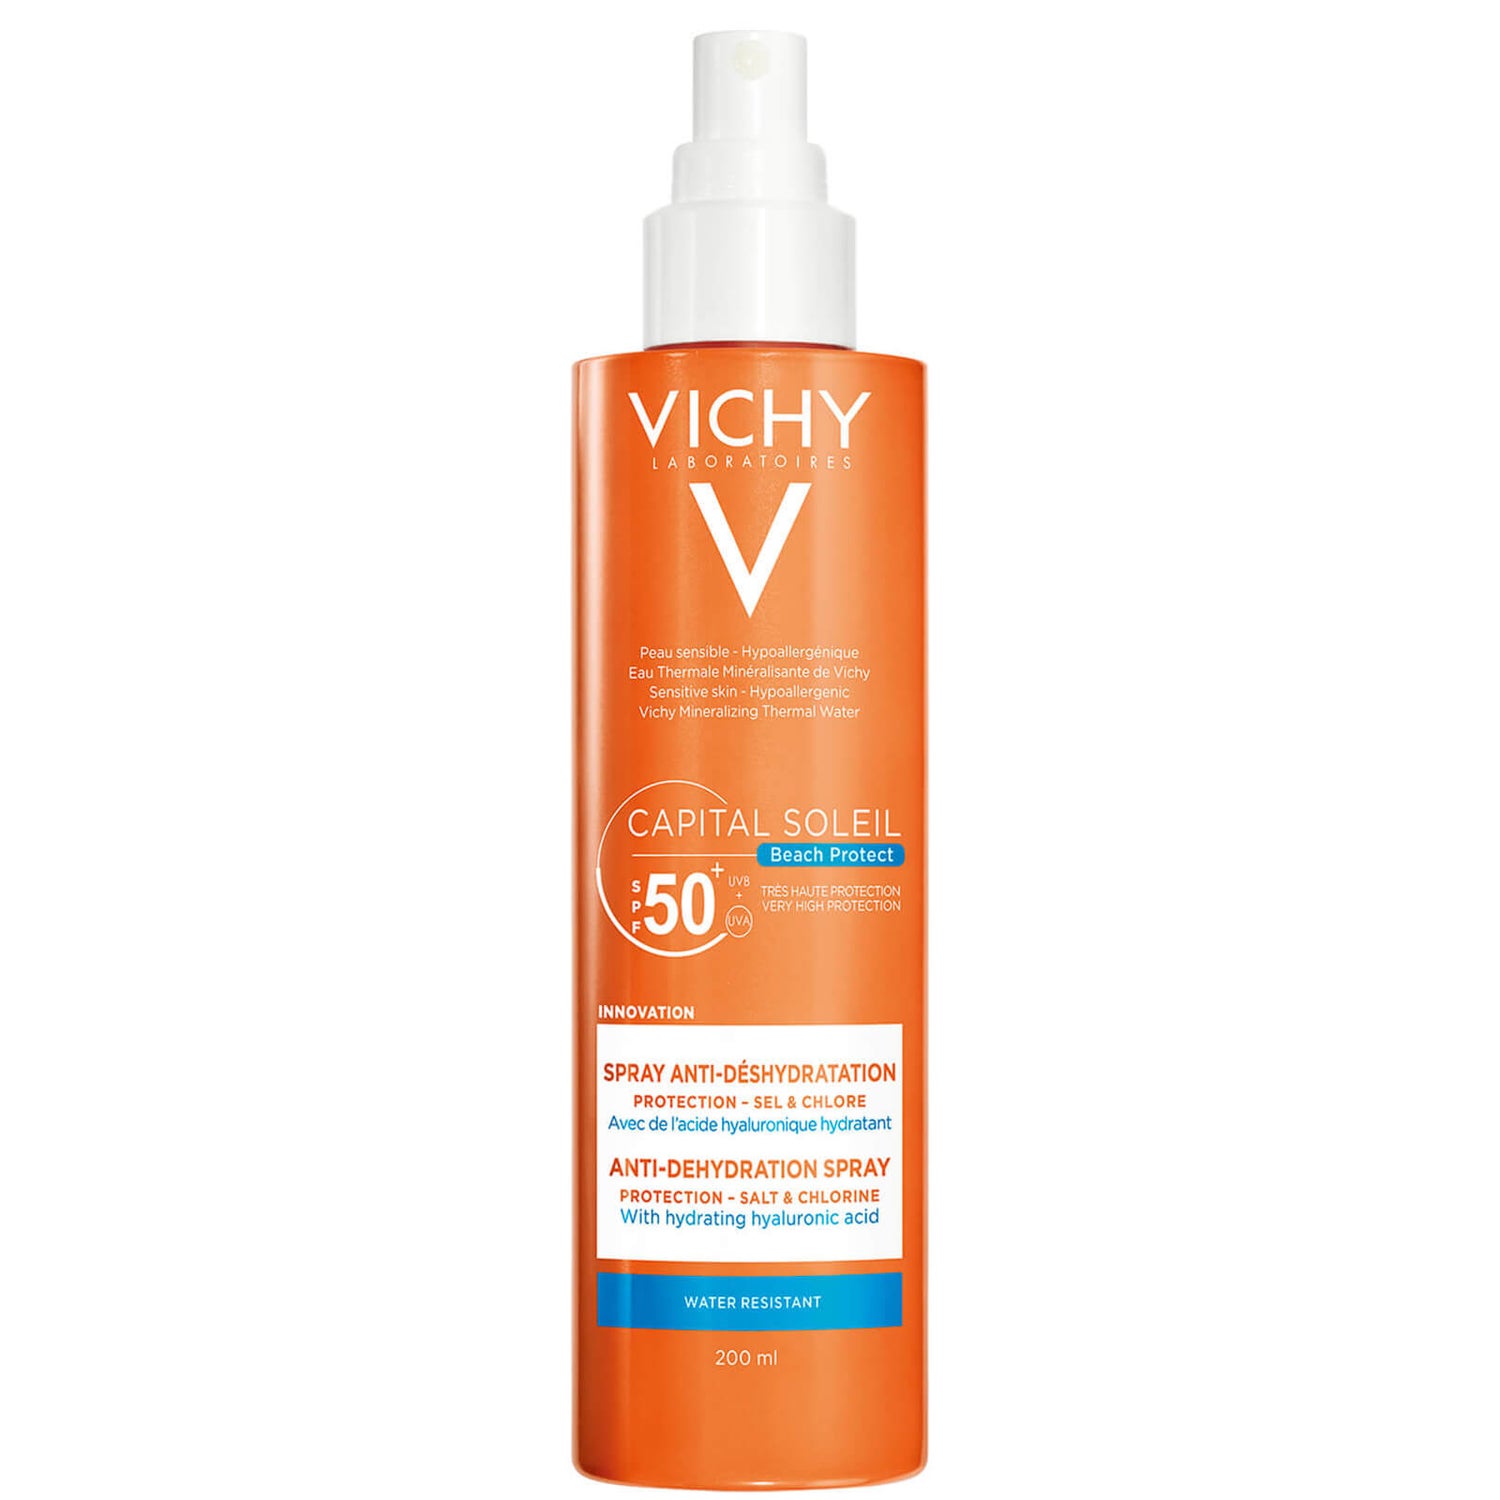 Vichy Capital Soleil Beach Protect spray solare anti disidratazione SPF 50 200 ml